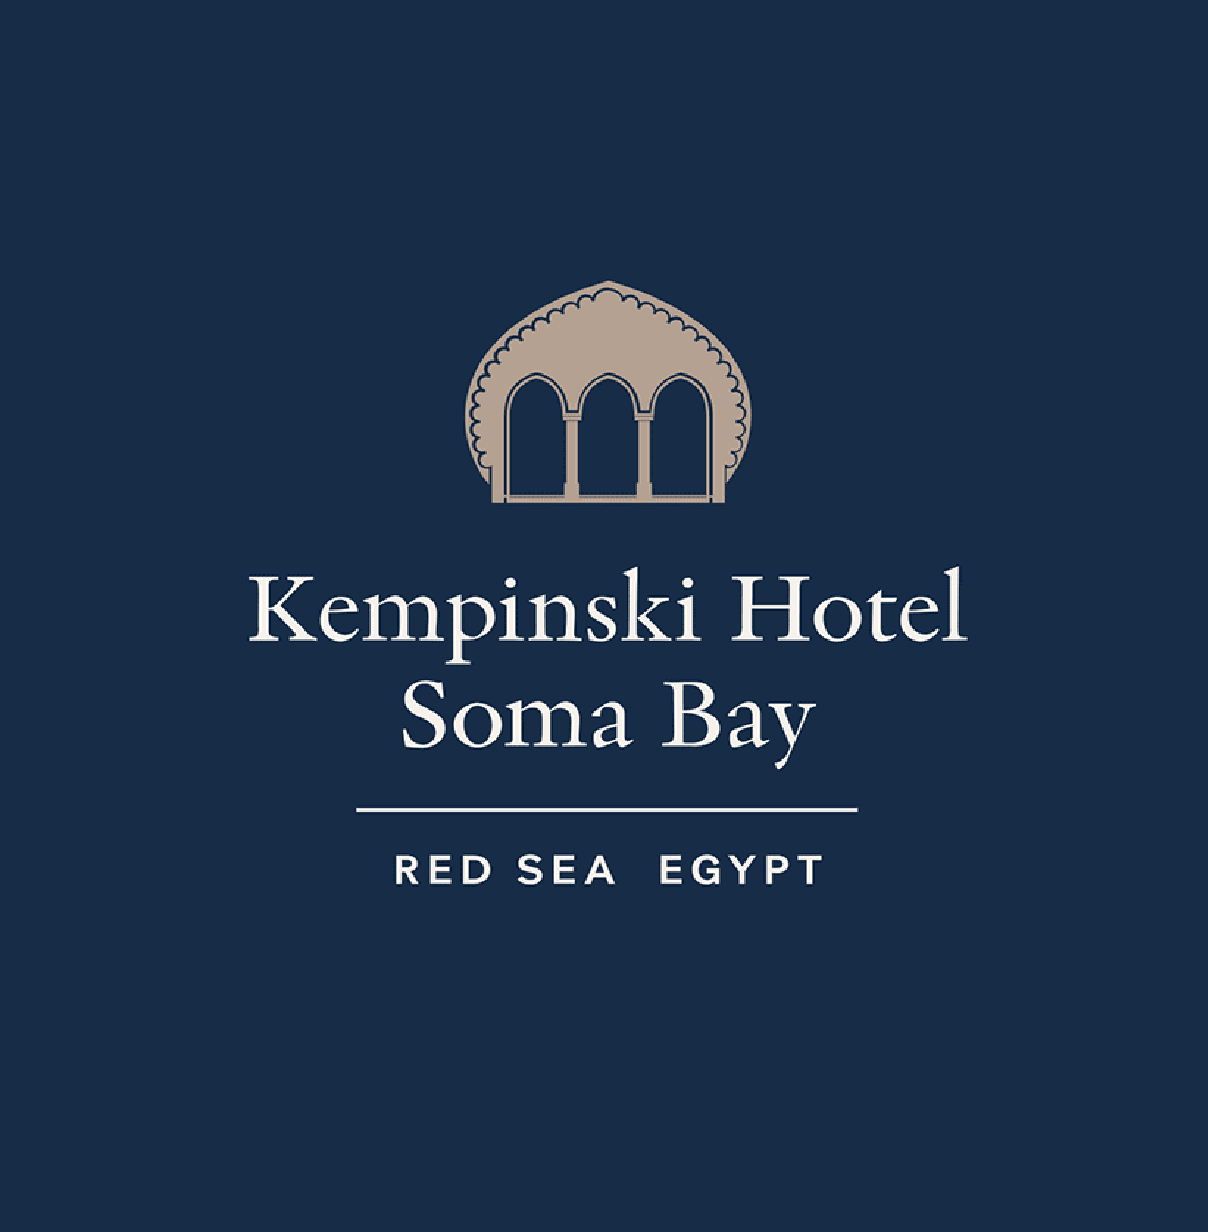 Kempinski Hotel Soma Bay